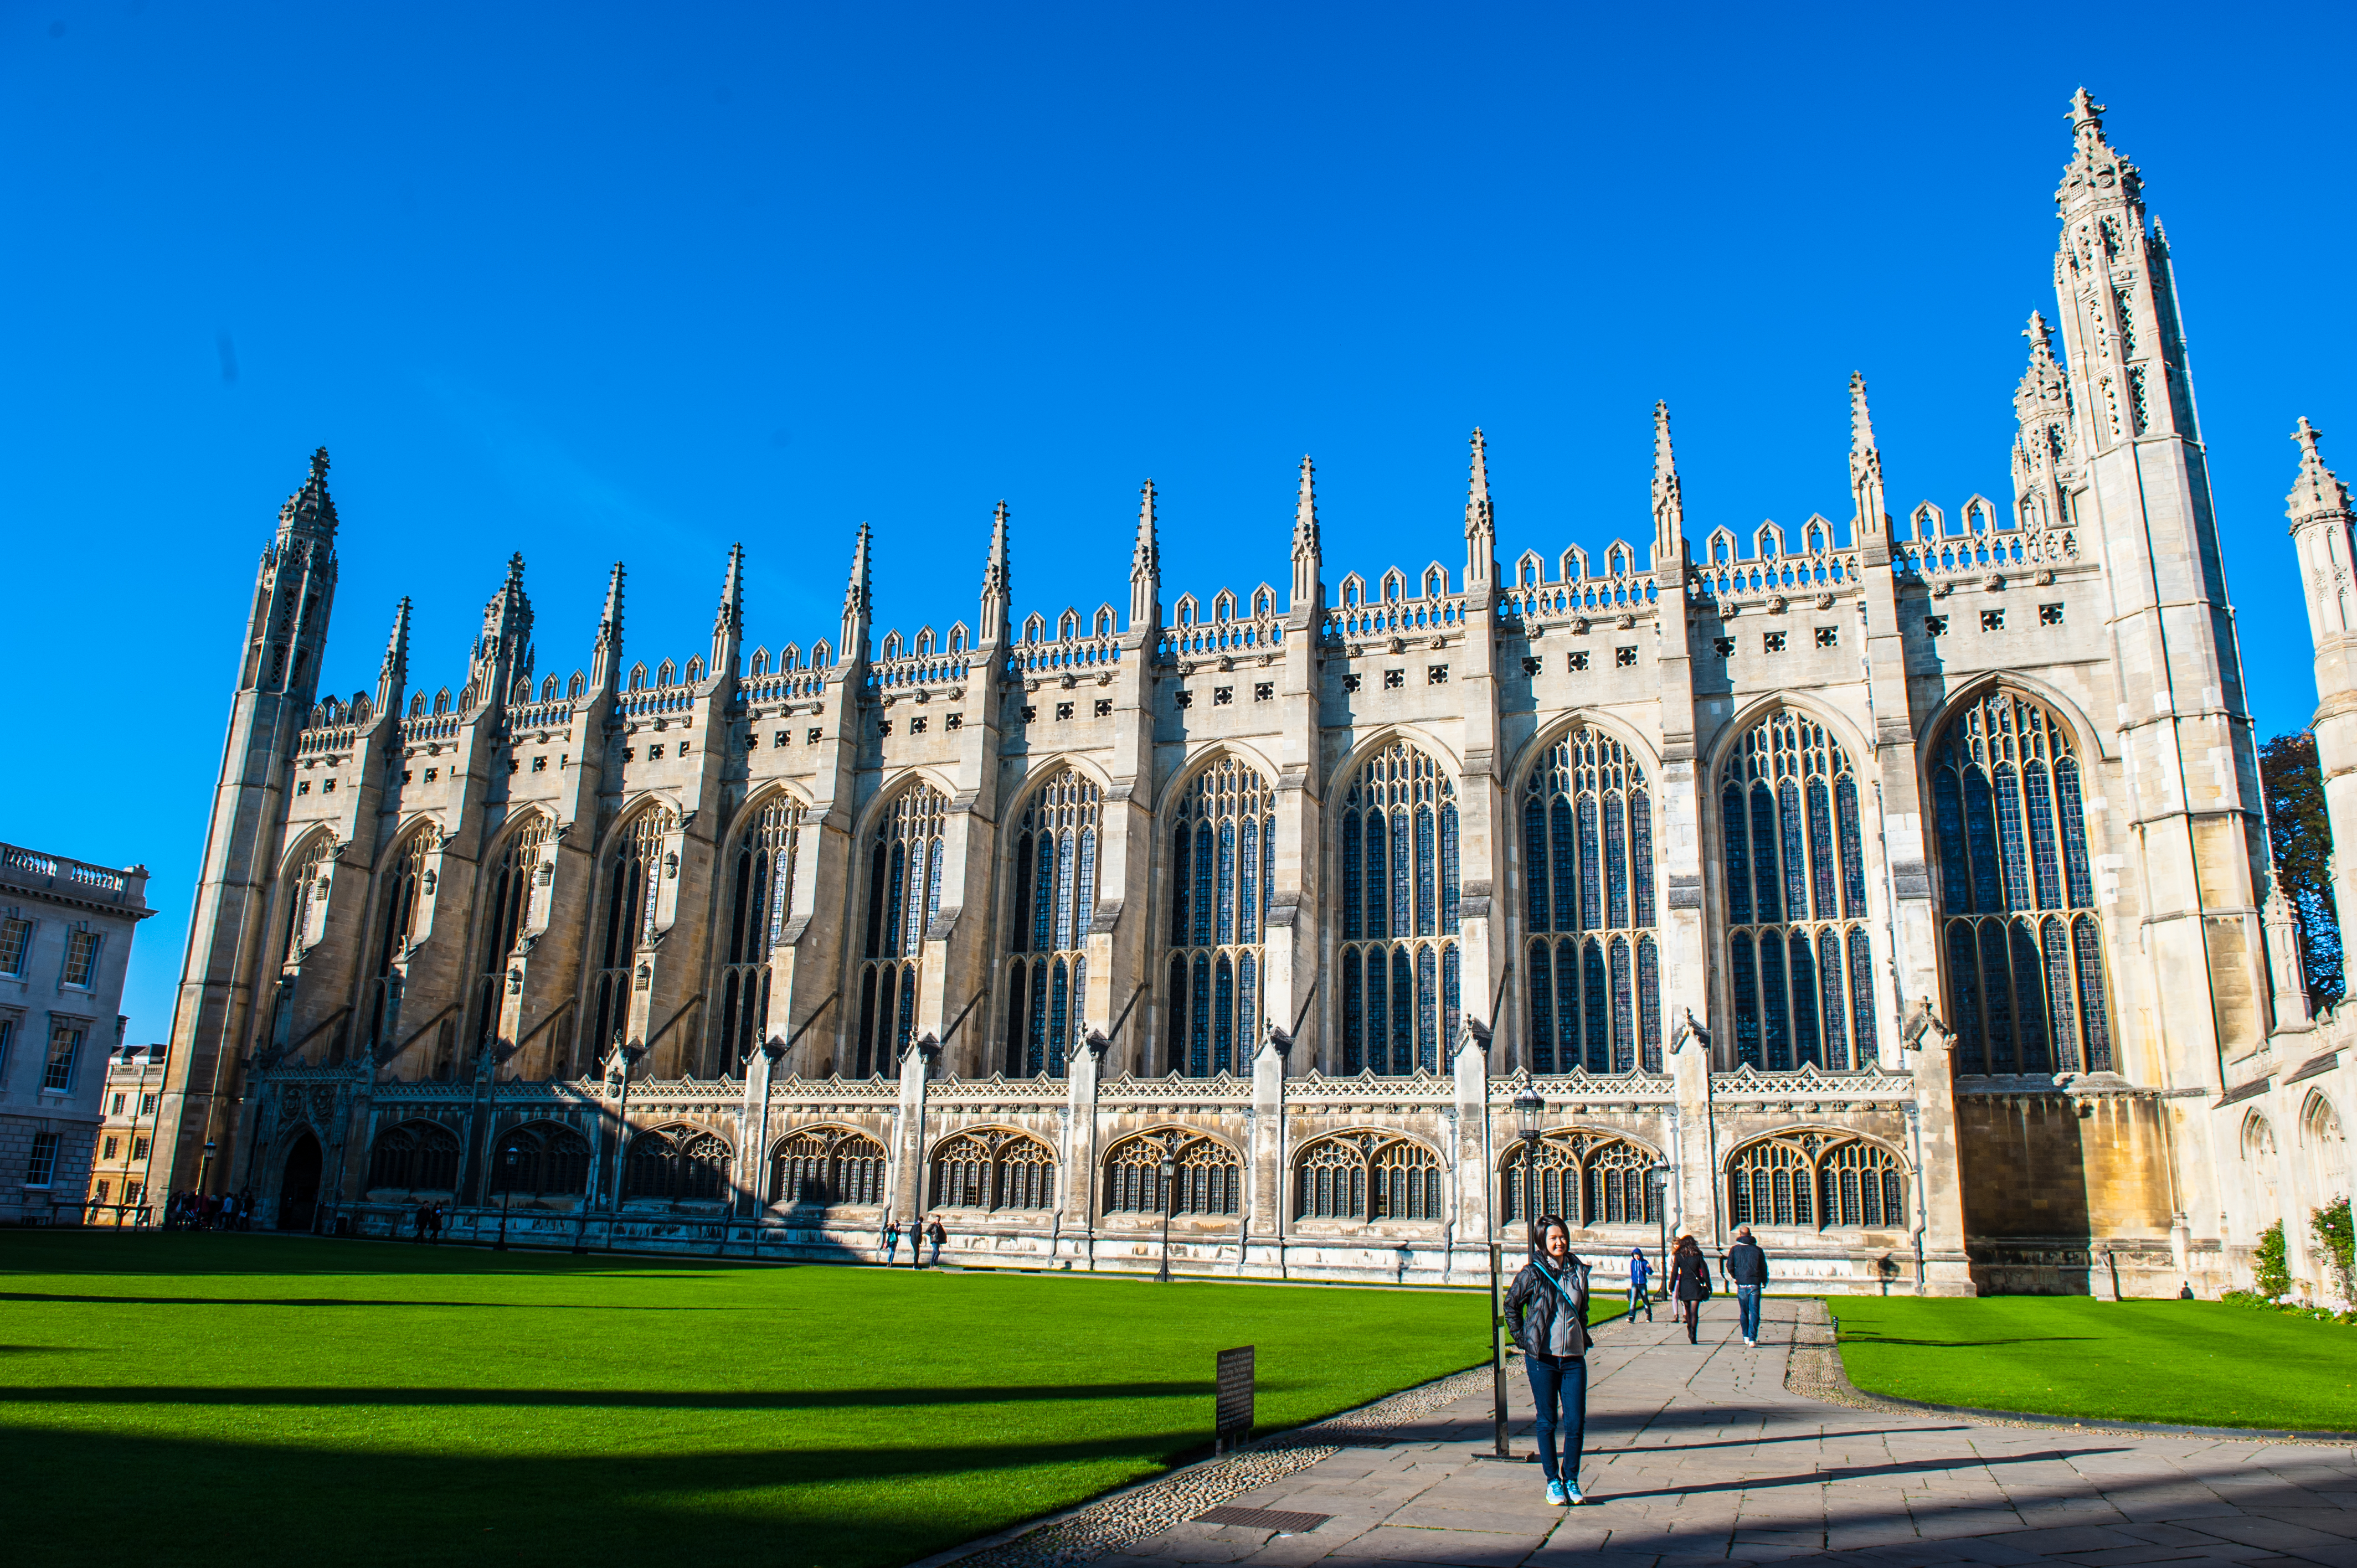 Back to Cambridge…